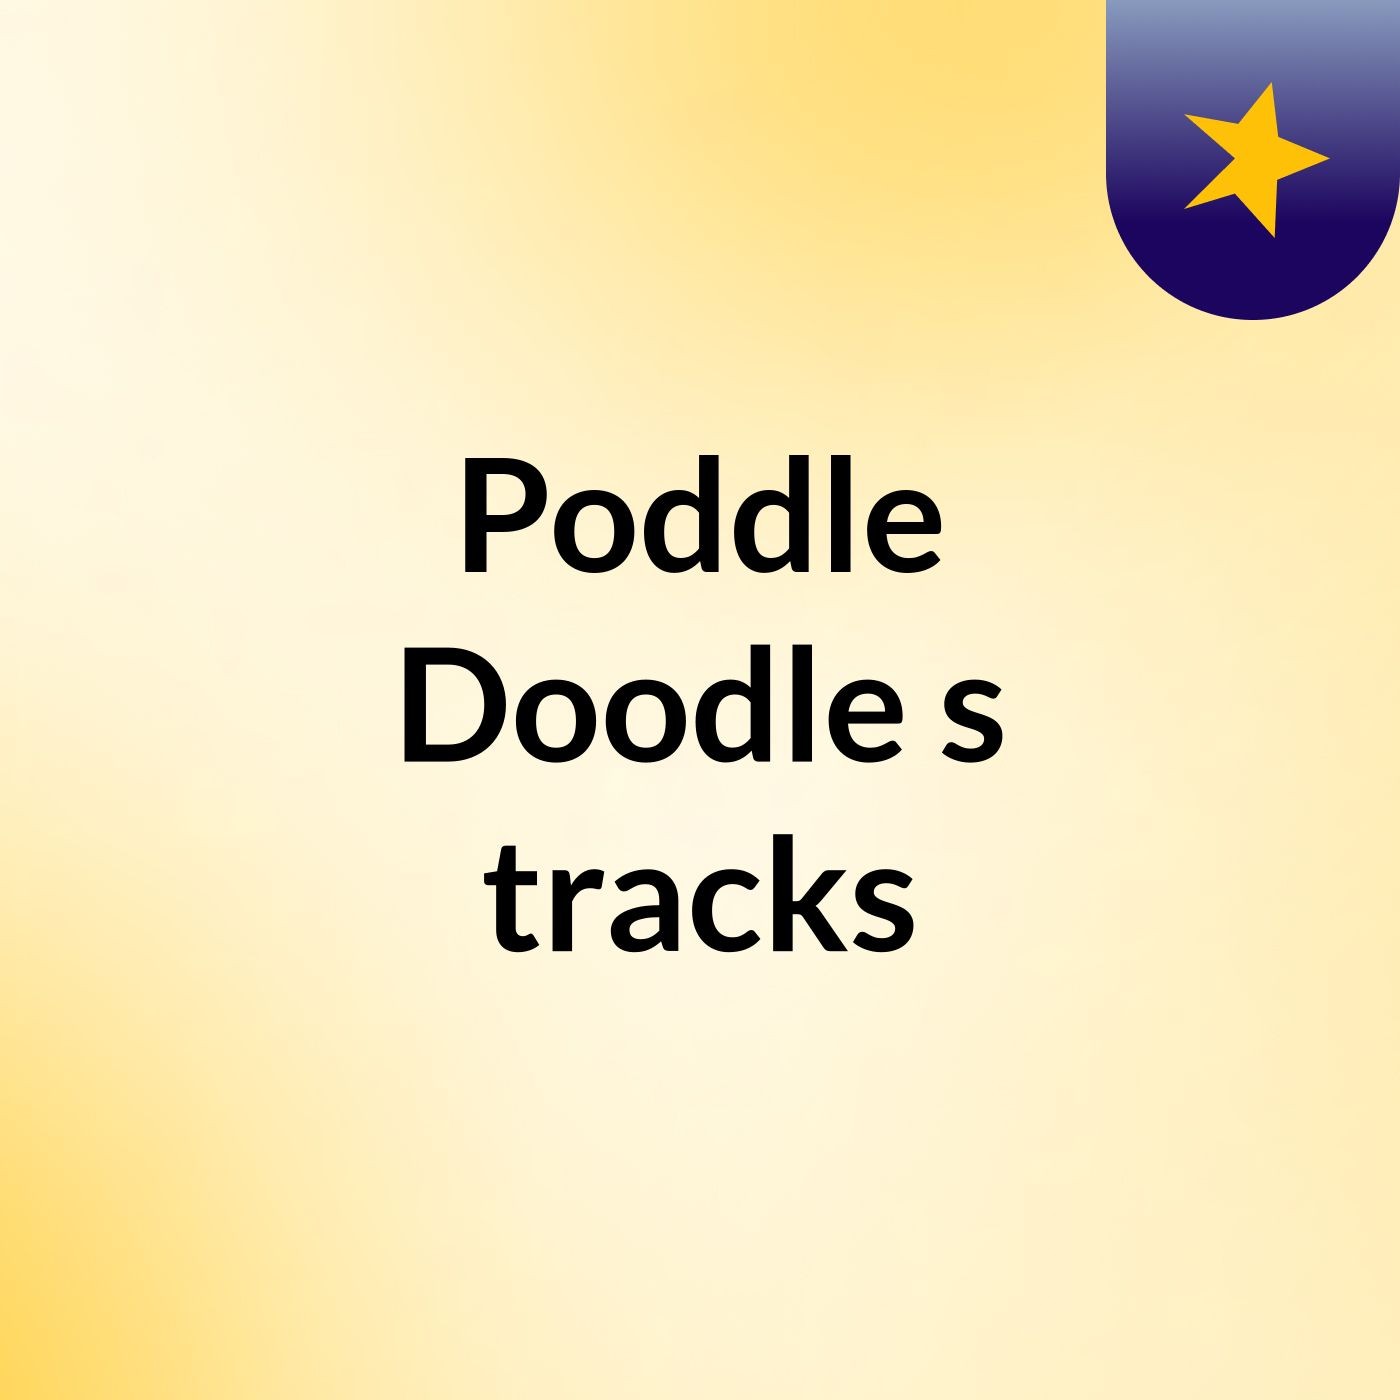 Poddle Doodle's tracks